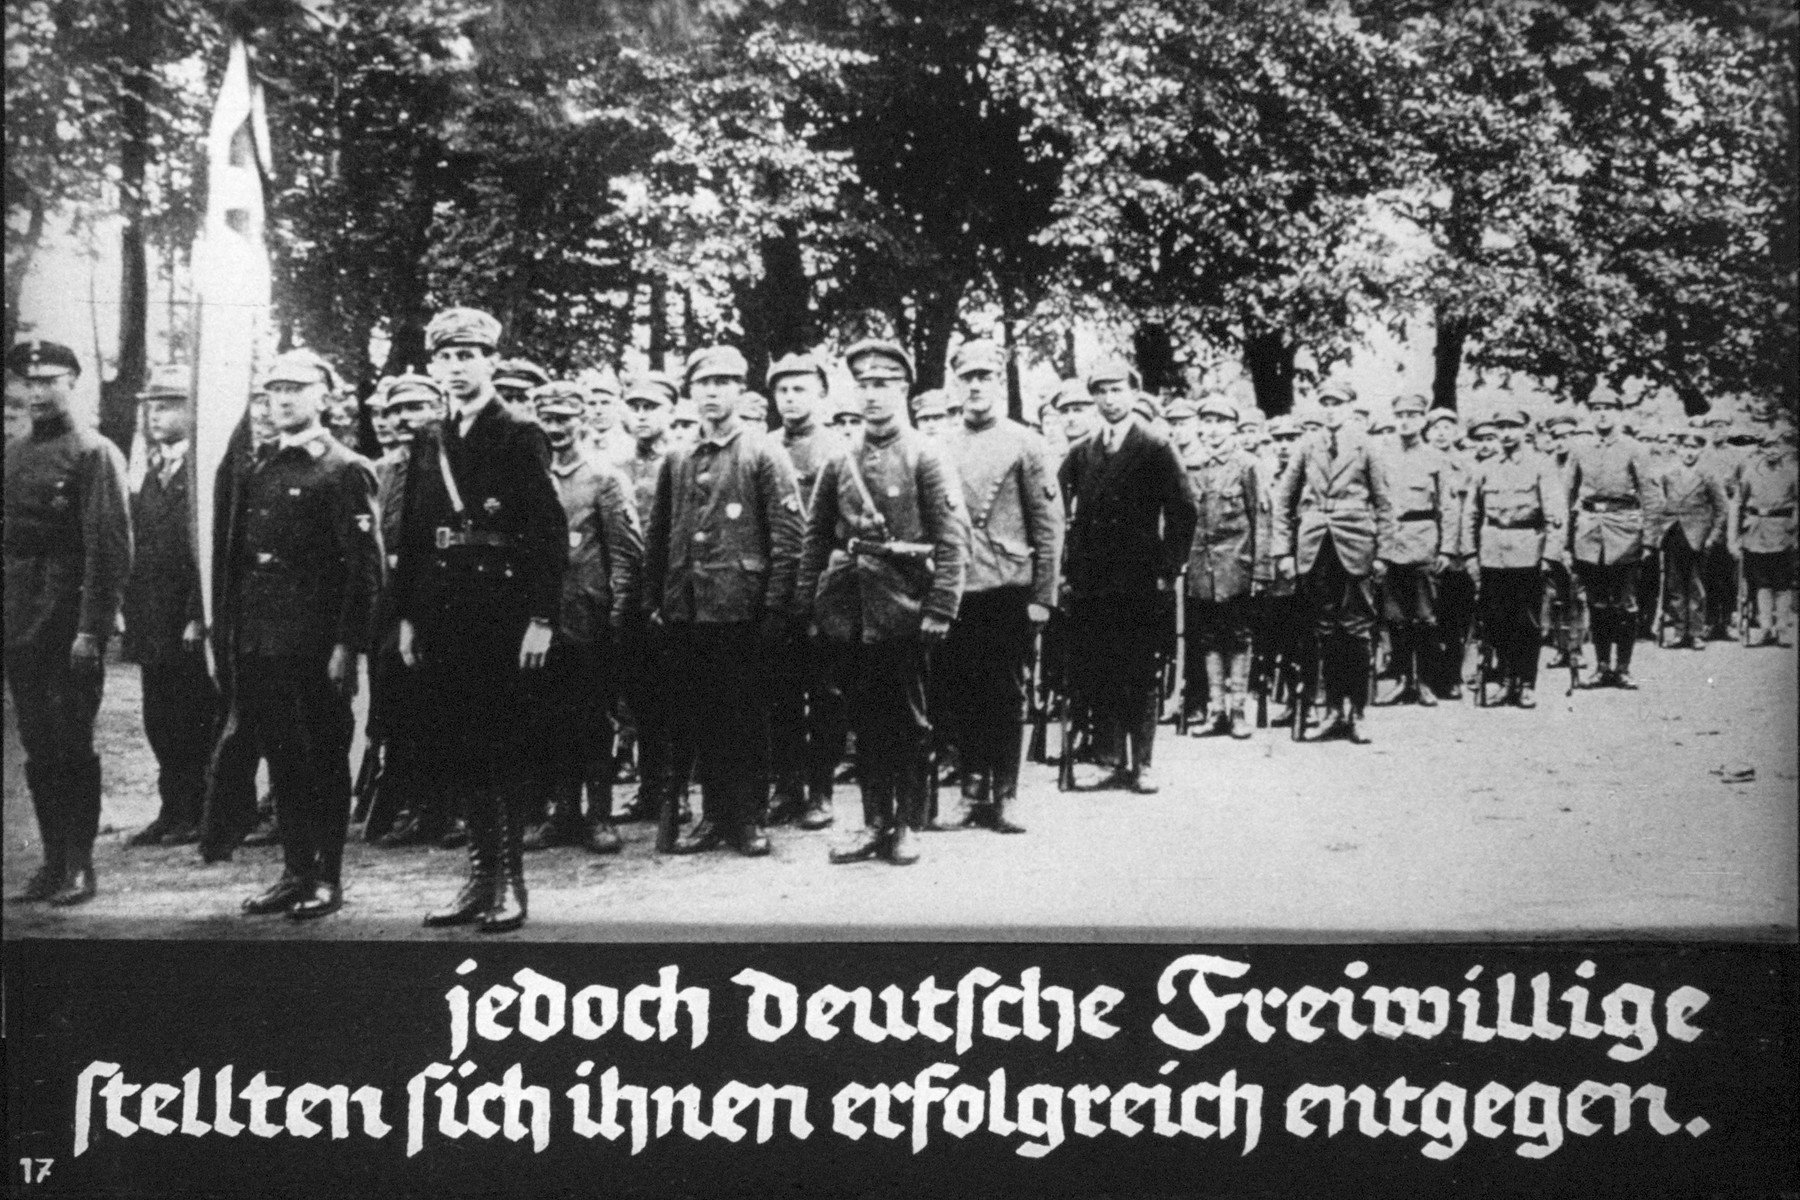 18th Nazi propaganda slide from Hitler Youth educational material titled "Border Land Upper Silesia."

jedoch deutsche Freiwillige  stellten sich ihnen erfolgreich entgegen.
//
However, German volunteers opposed them successfully.